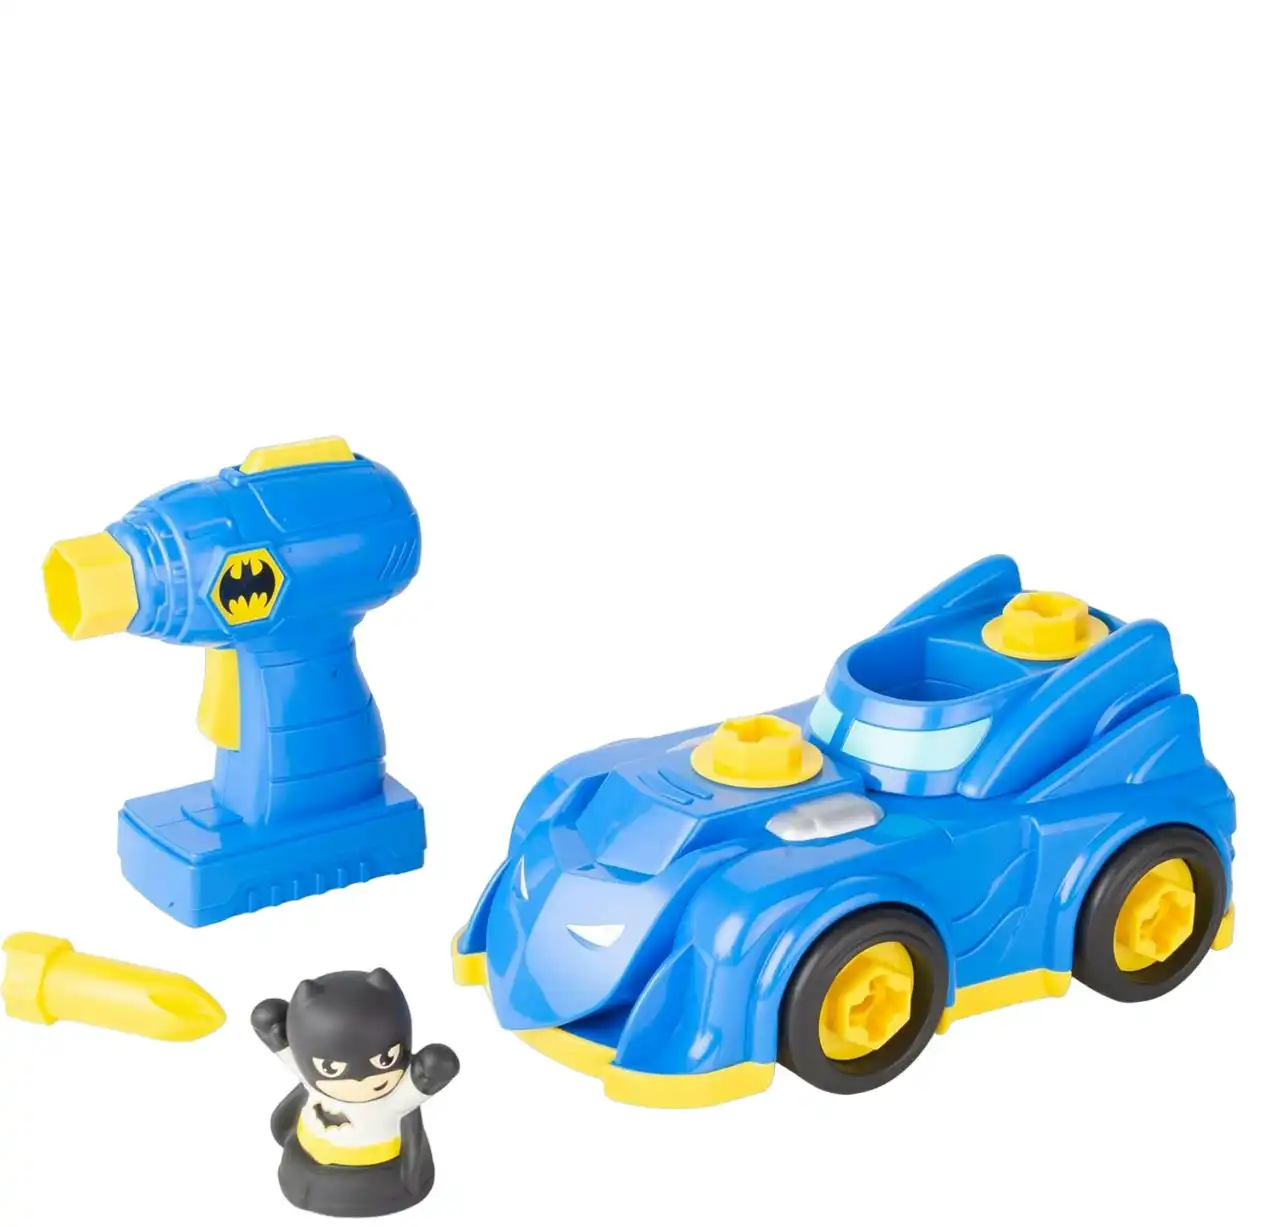 Batman Build-A-Buddy Batmobile Toy with Drill